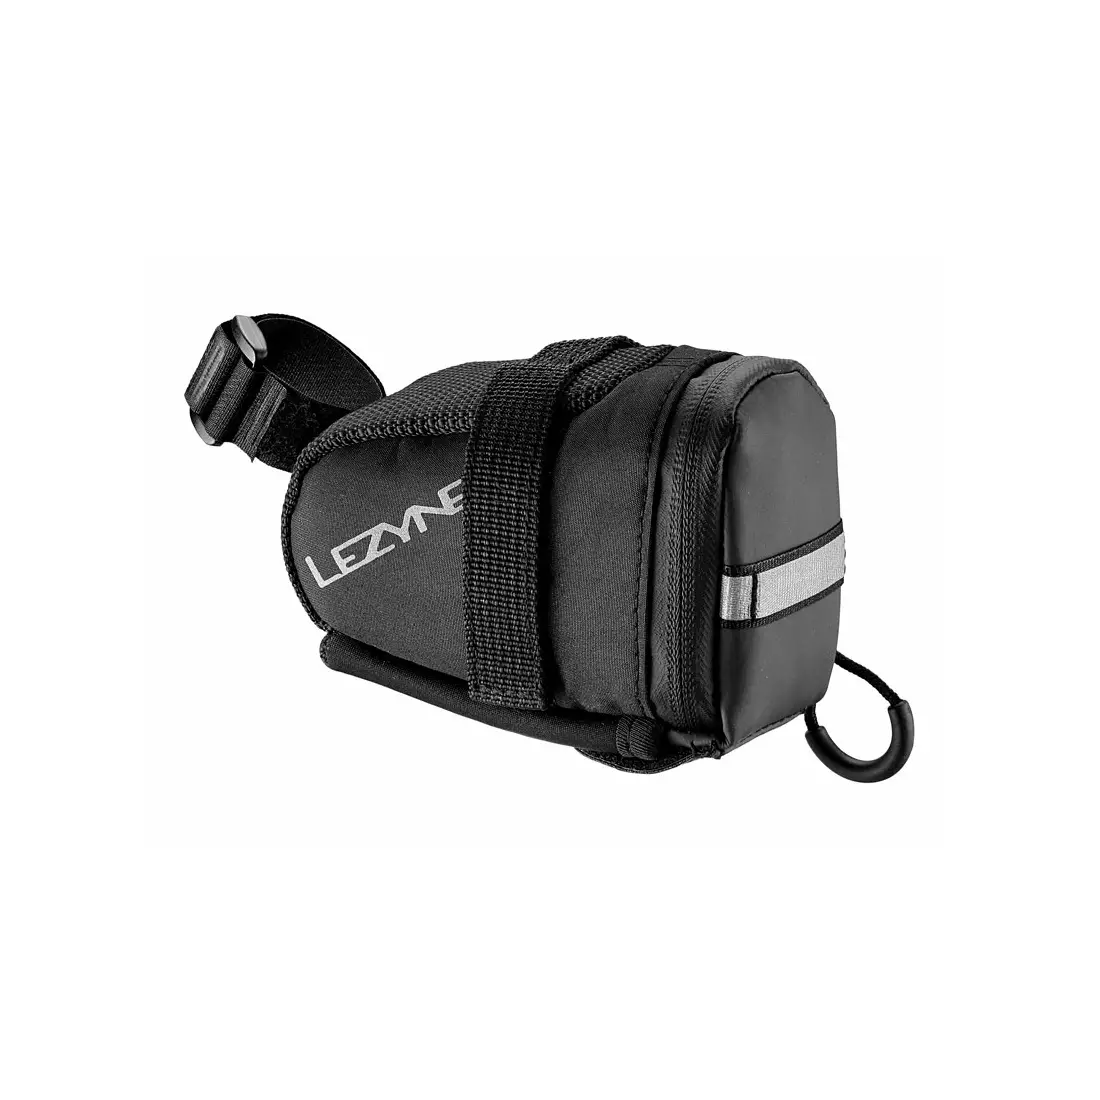 LEZYNE saddle bag S-CADDY black, waterproof poj: 0,5L/70g